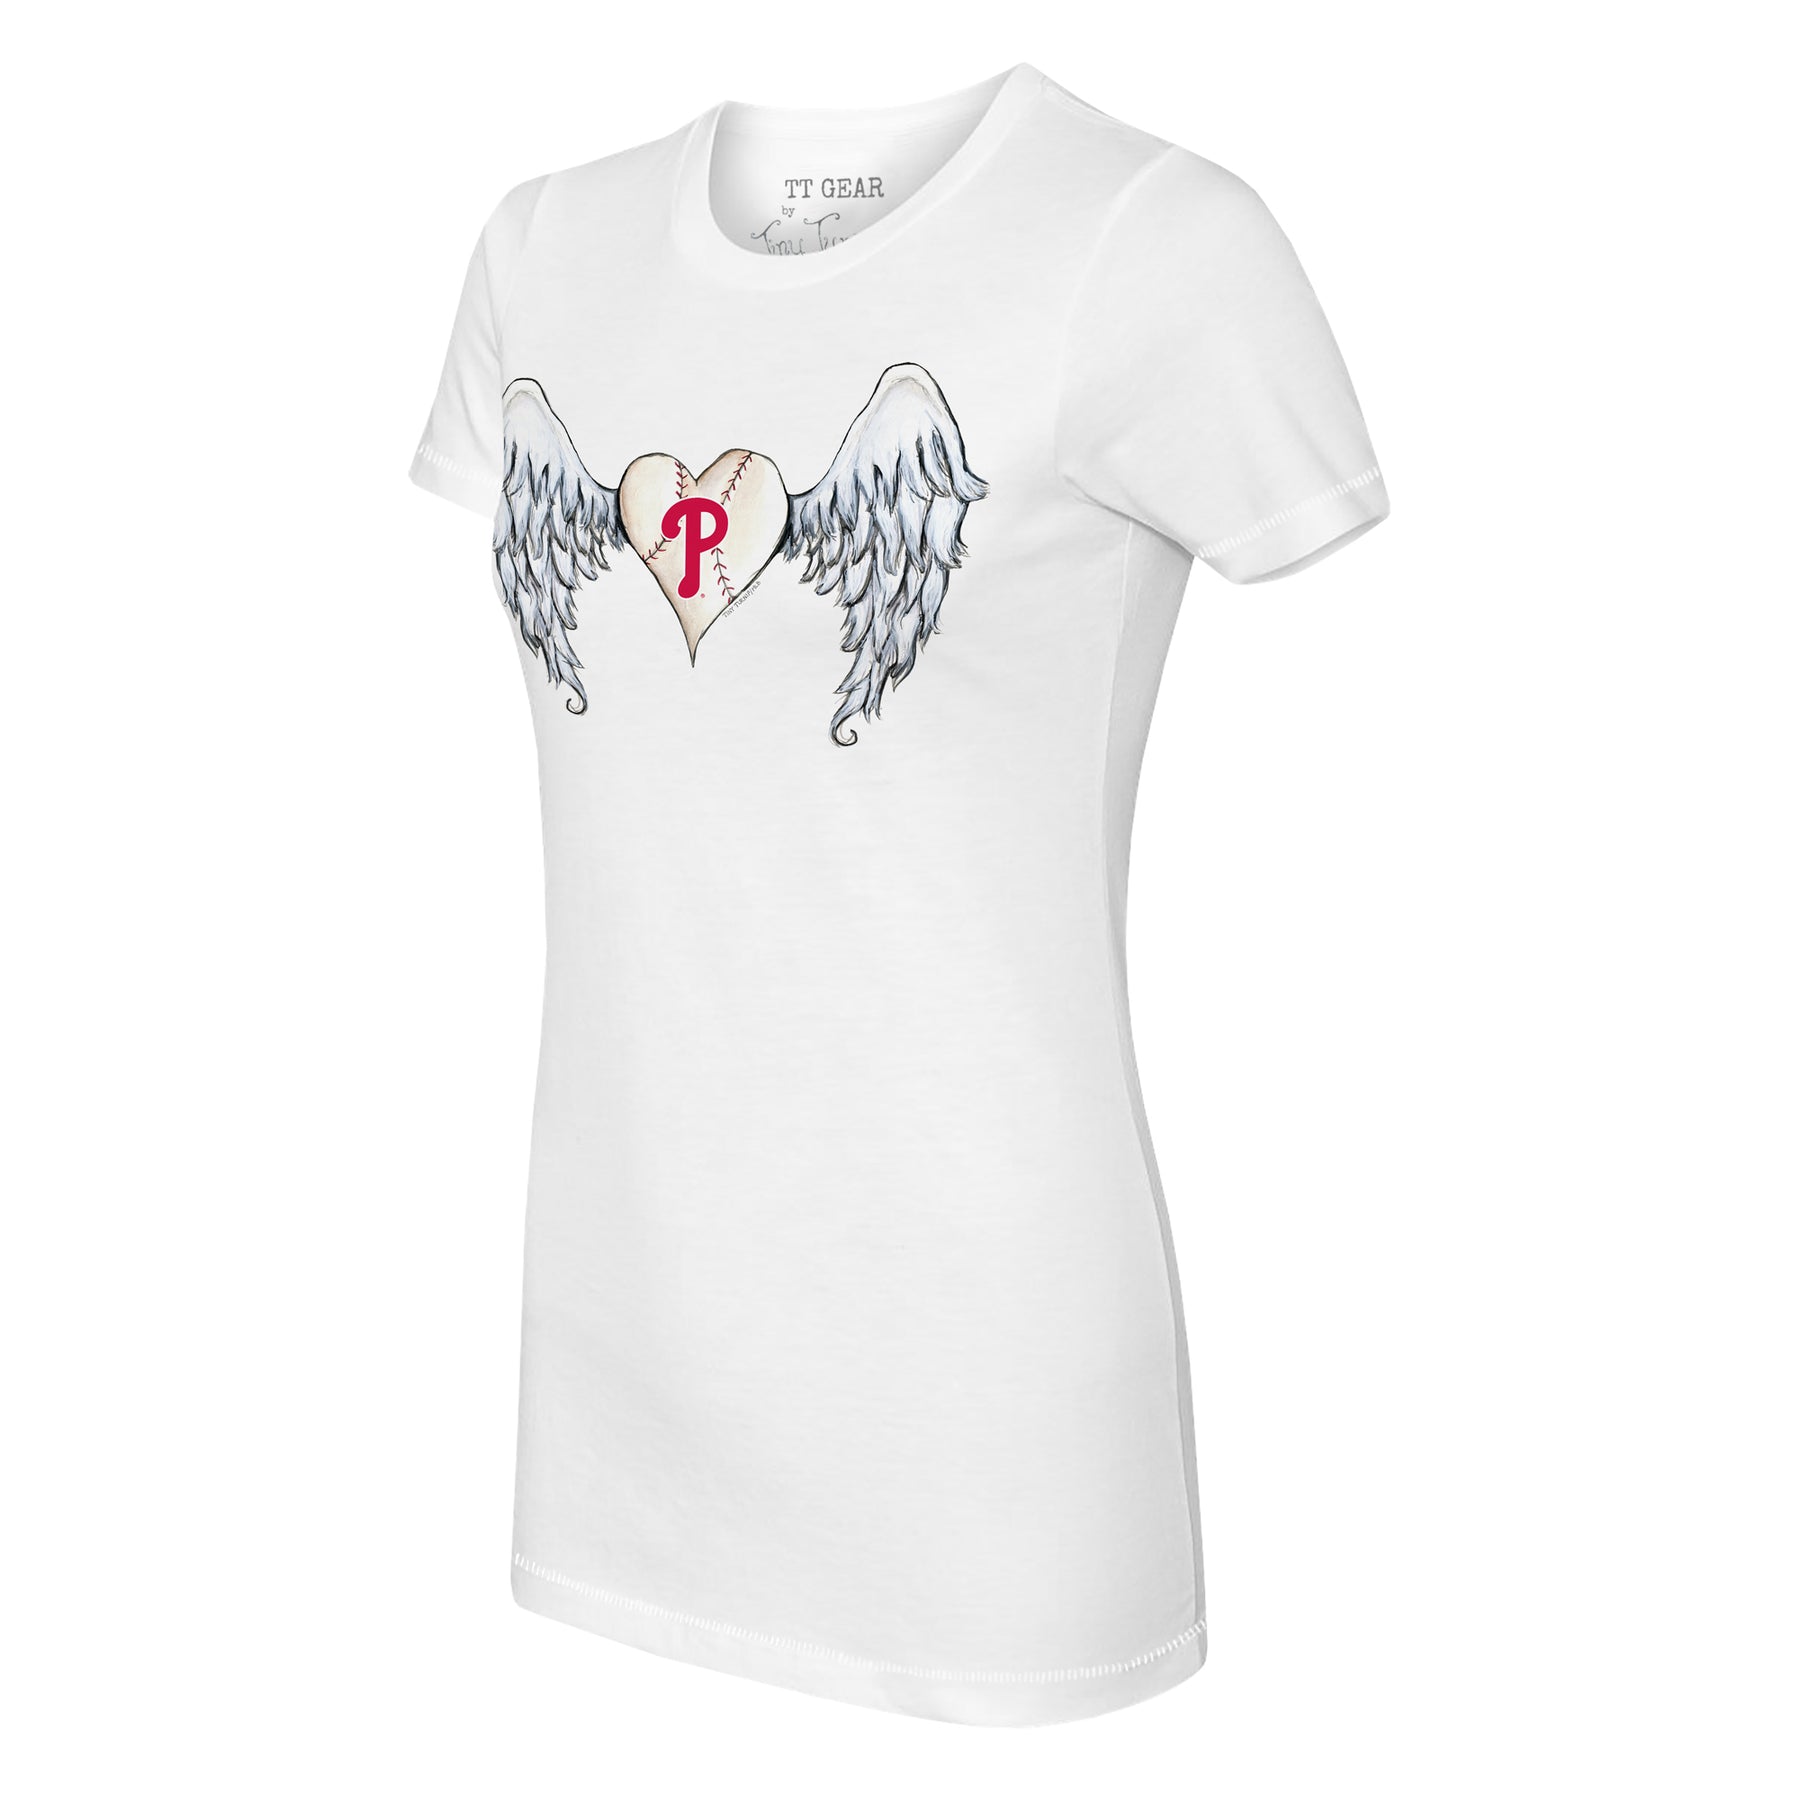 Lids Philadelphia Phillies Tiny Turnip Women's Babes 3/4-Sleeve Raglan T- Shirt - White/Red